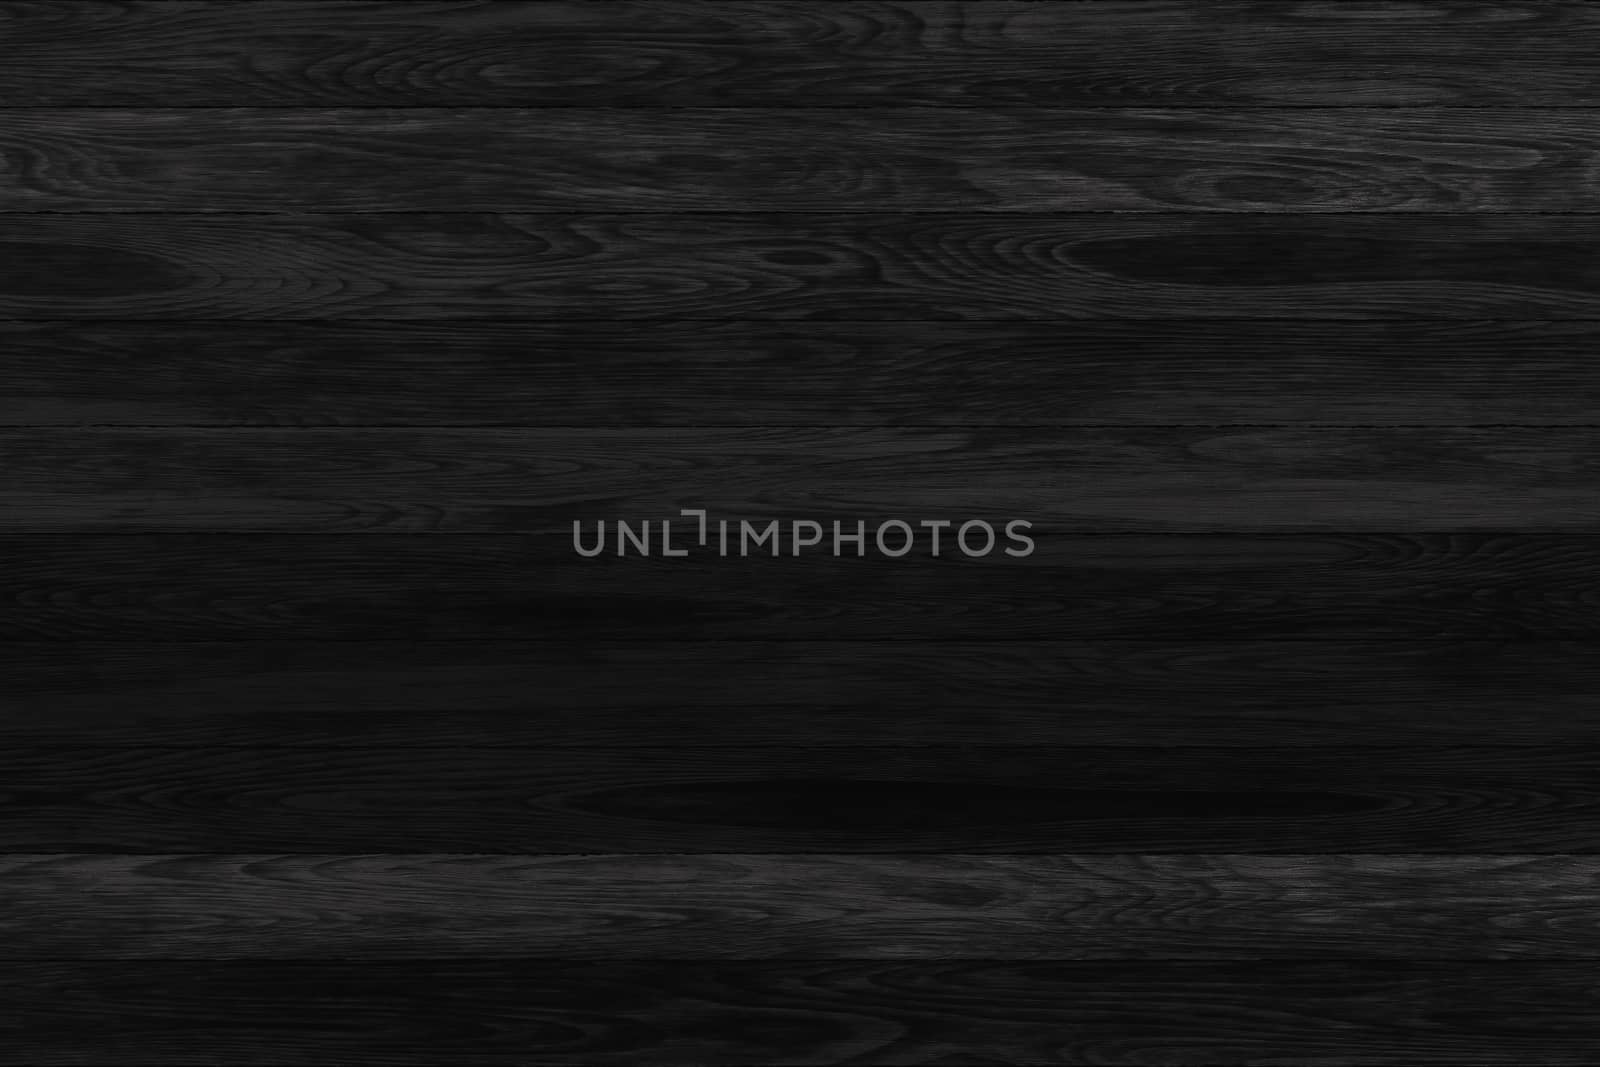 Black grunge wood panels. Planks Background. old wall wooden floor vintage